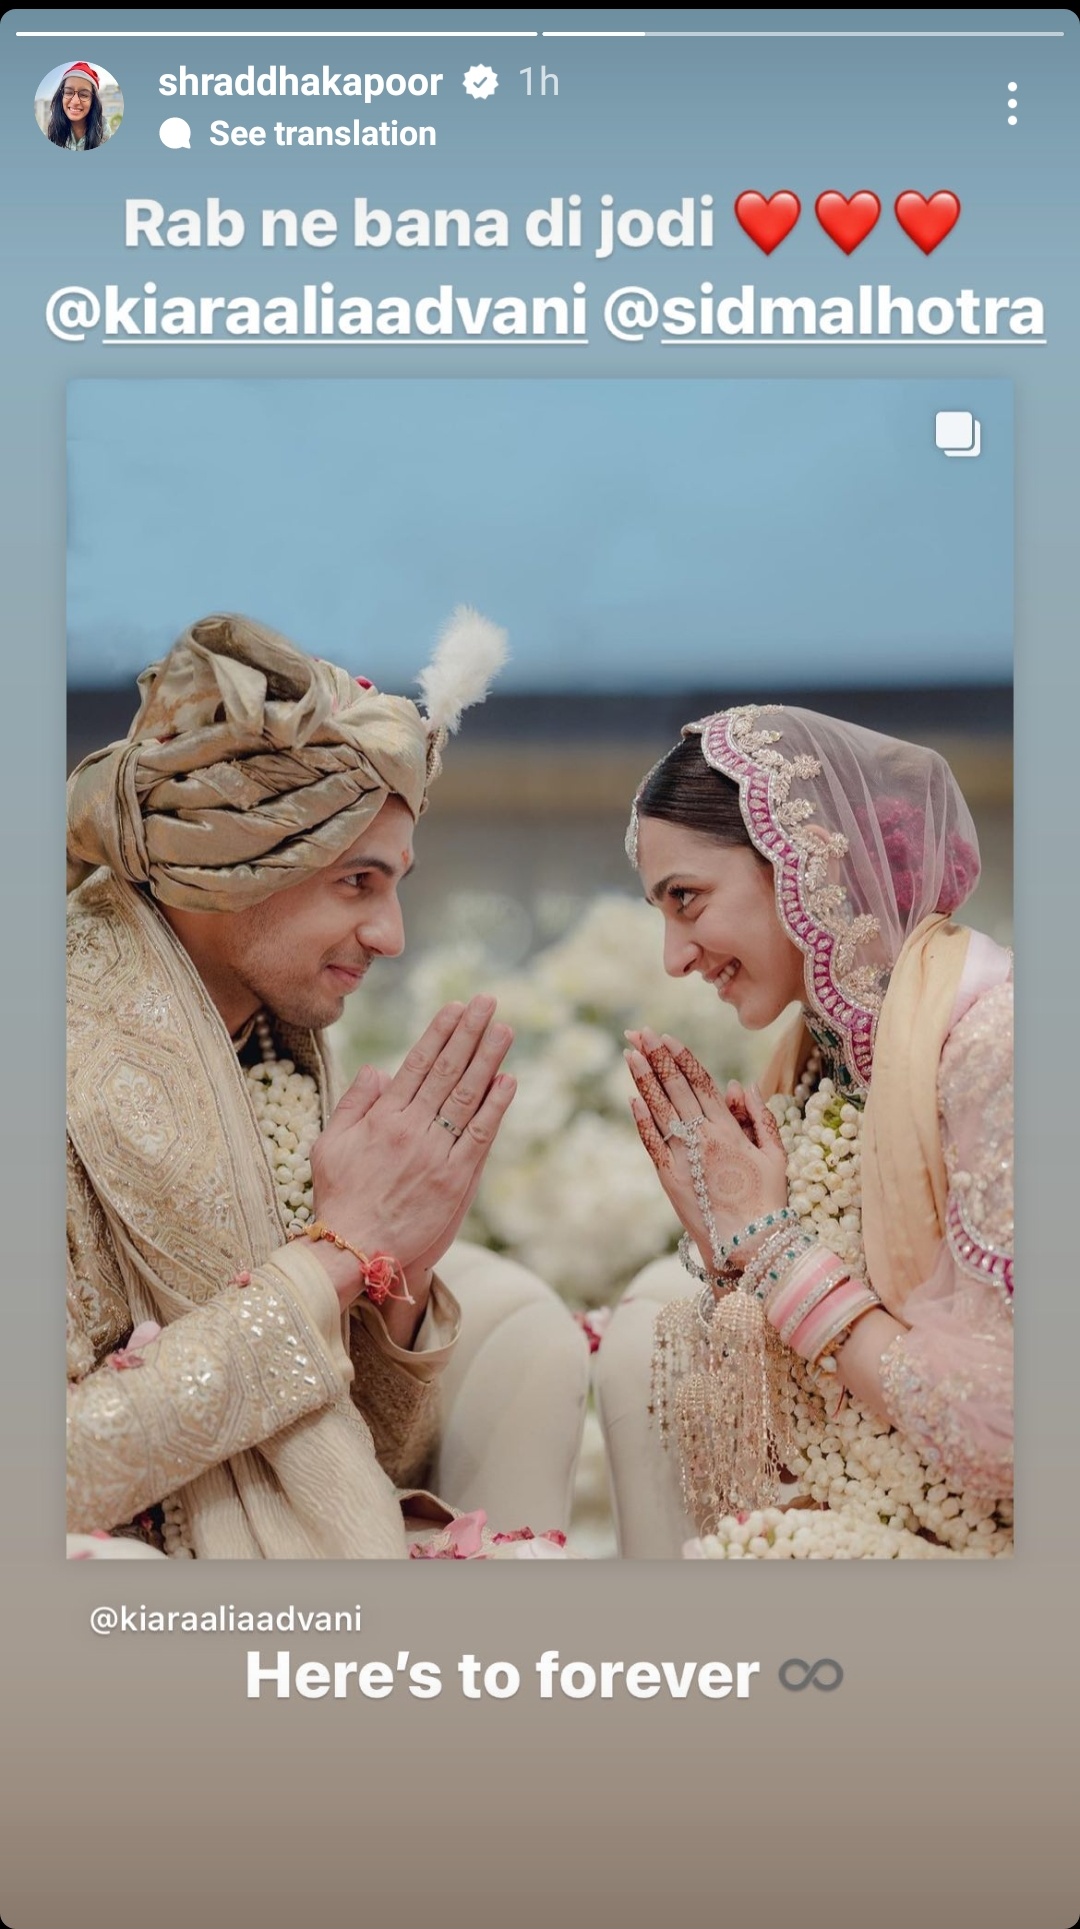 Shraddha-Kapoor-showers-blessings-on-the-newlyweds